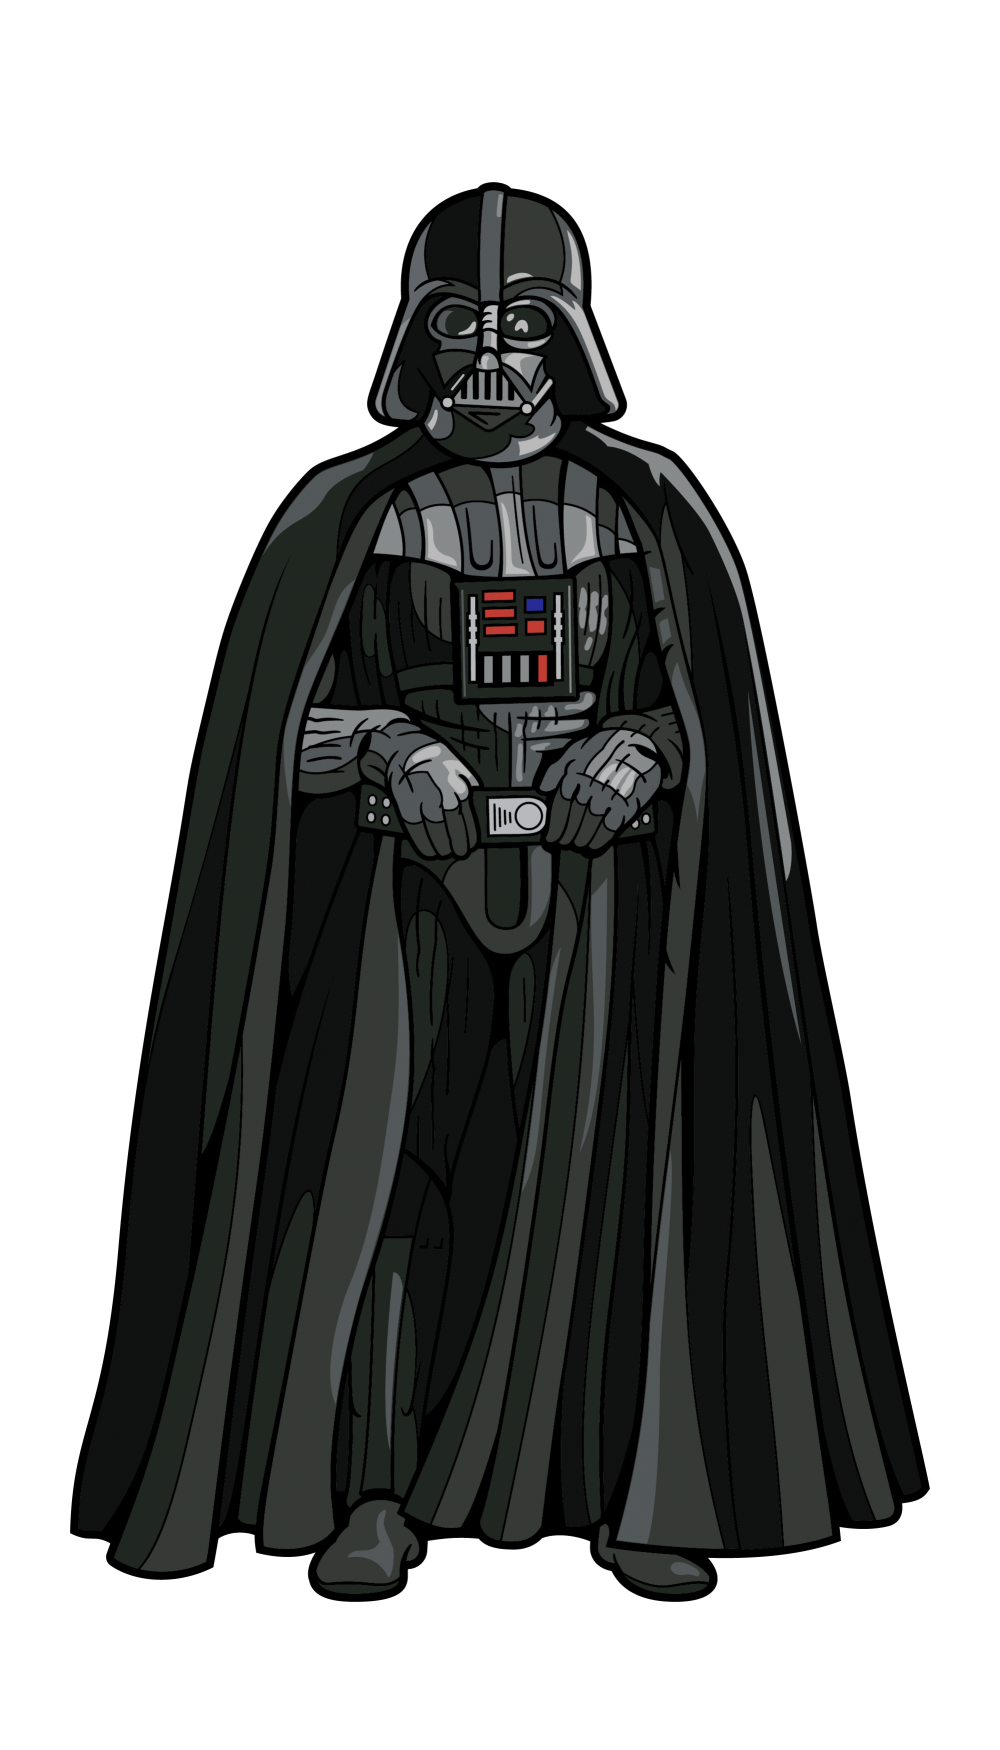 PREORDER Unruly Industries Darth Vader Designer collectable bust